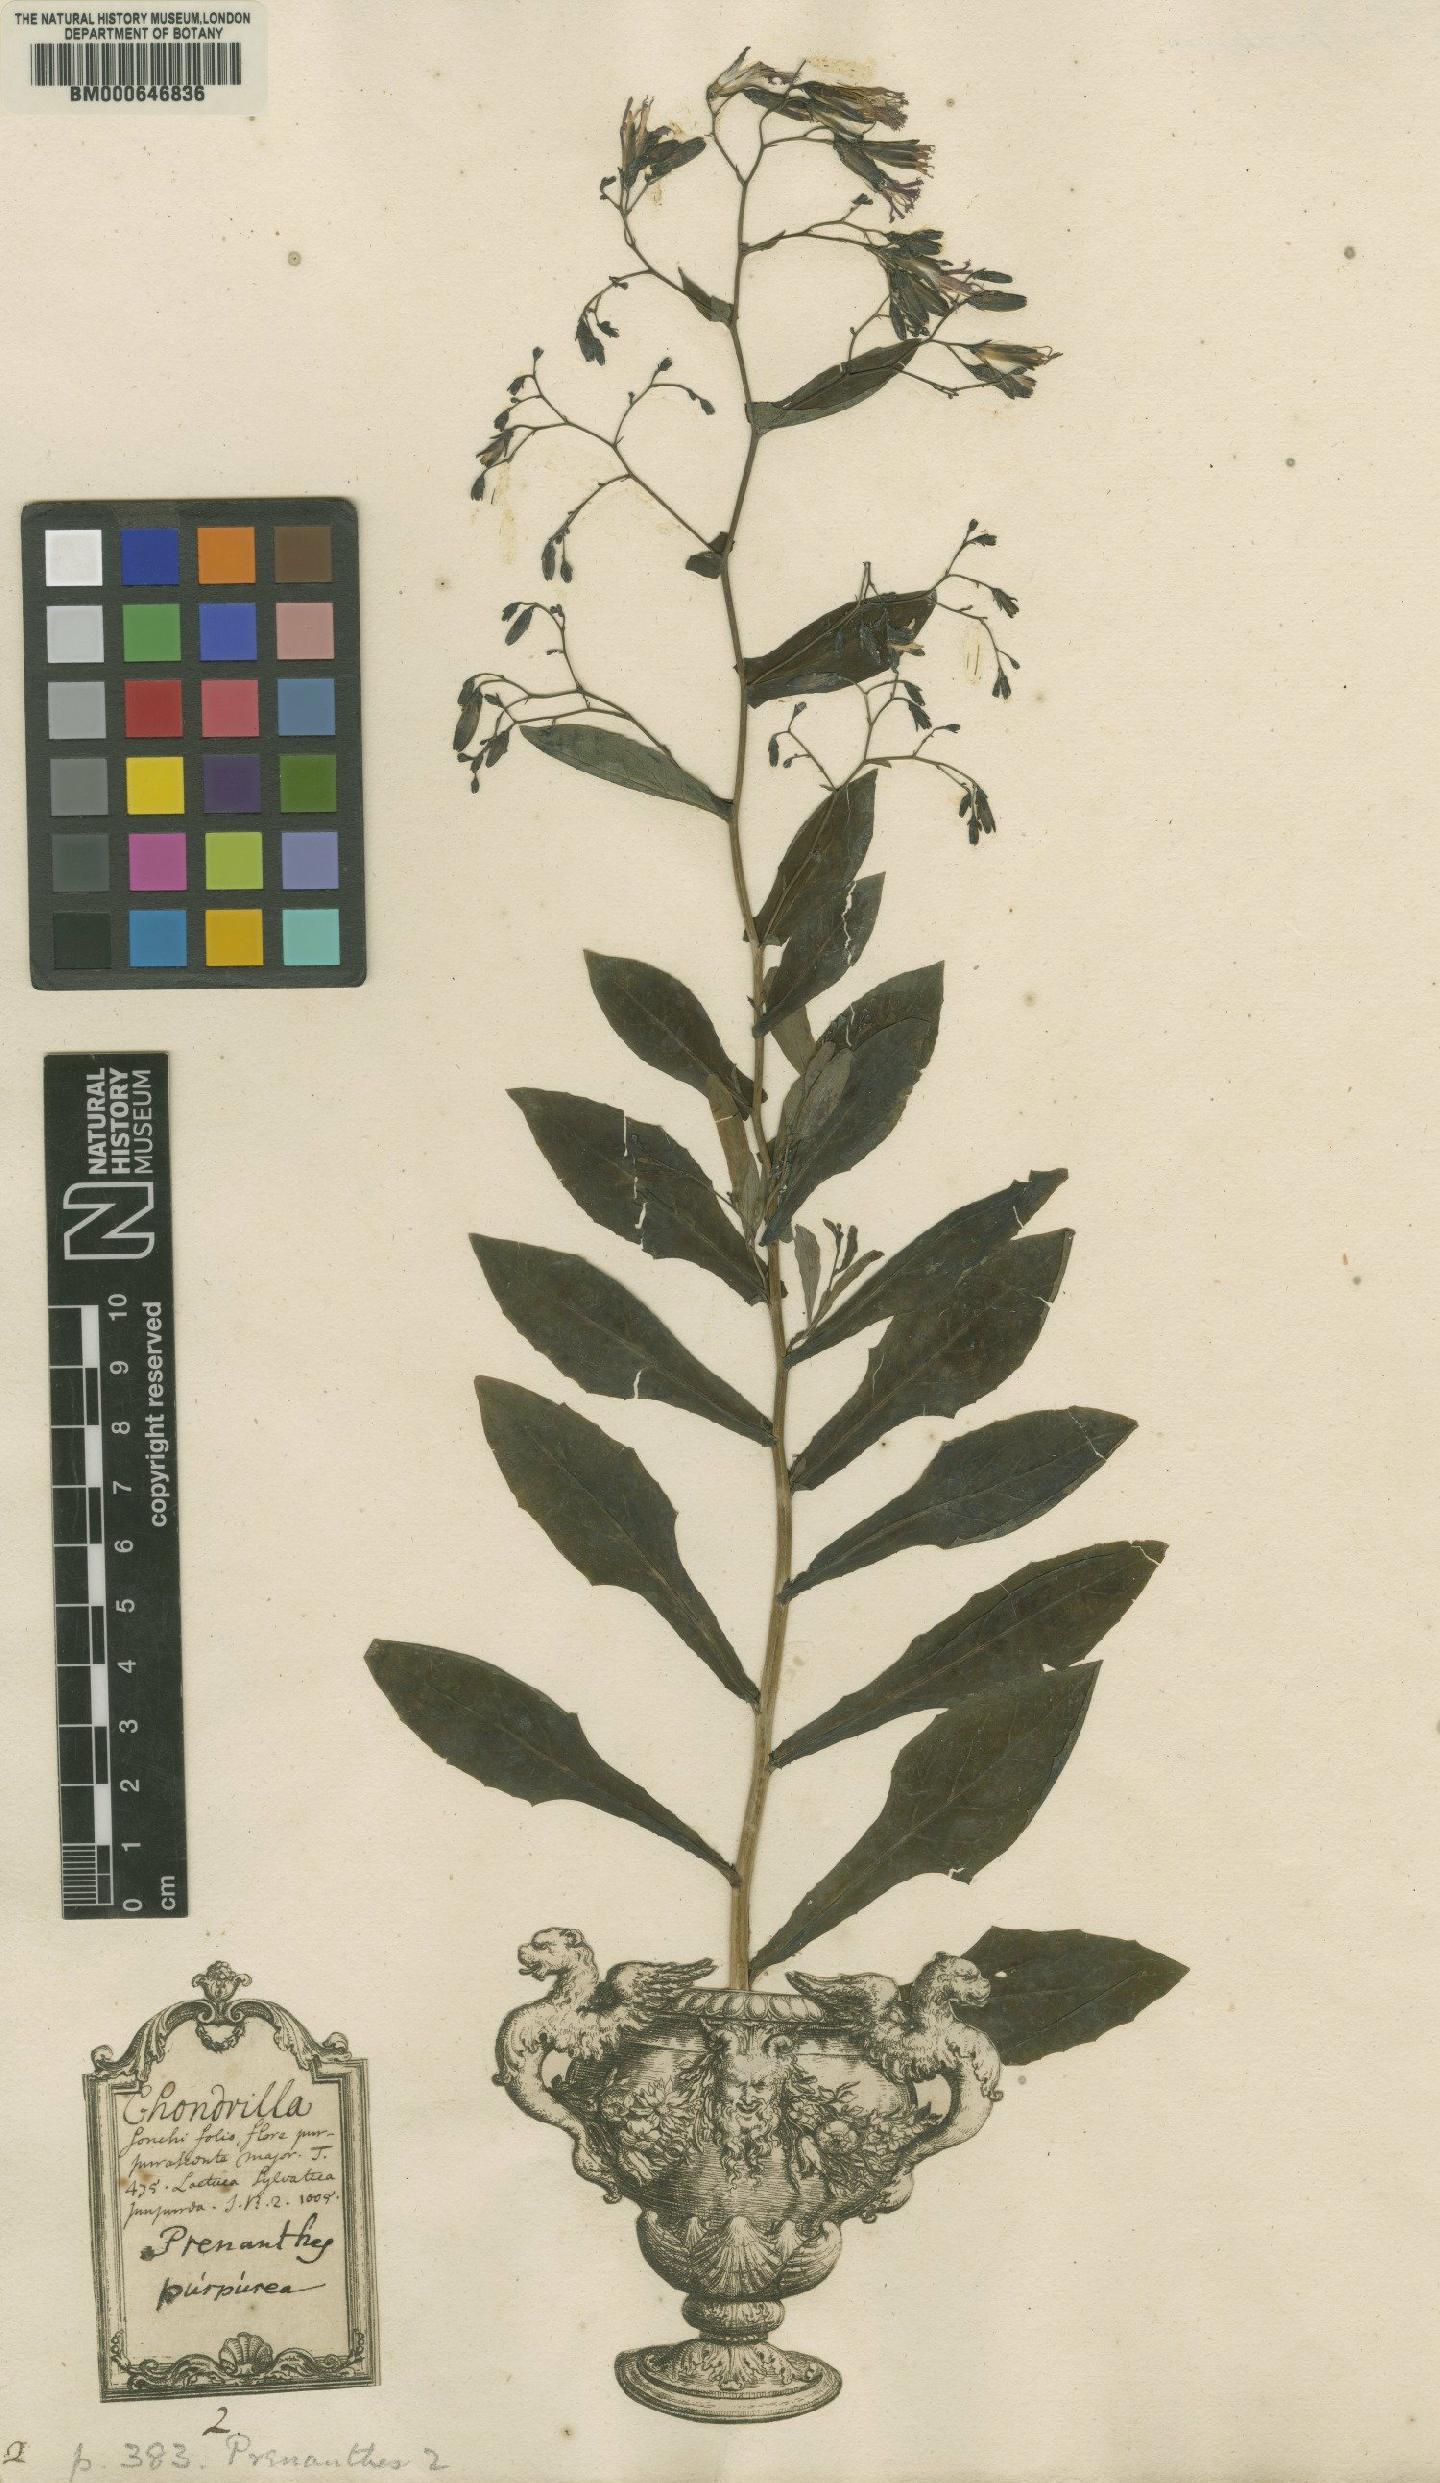 To NHMUK collection (Prenanthes purpurea L.; Lectotype; NHMUK:ecatalogue:4702709)